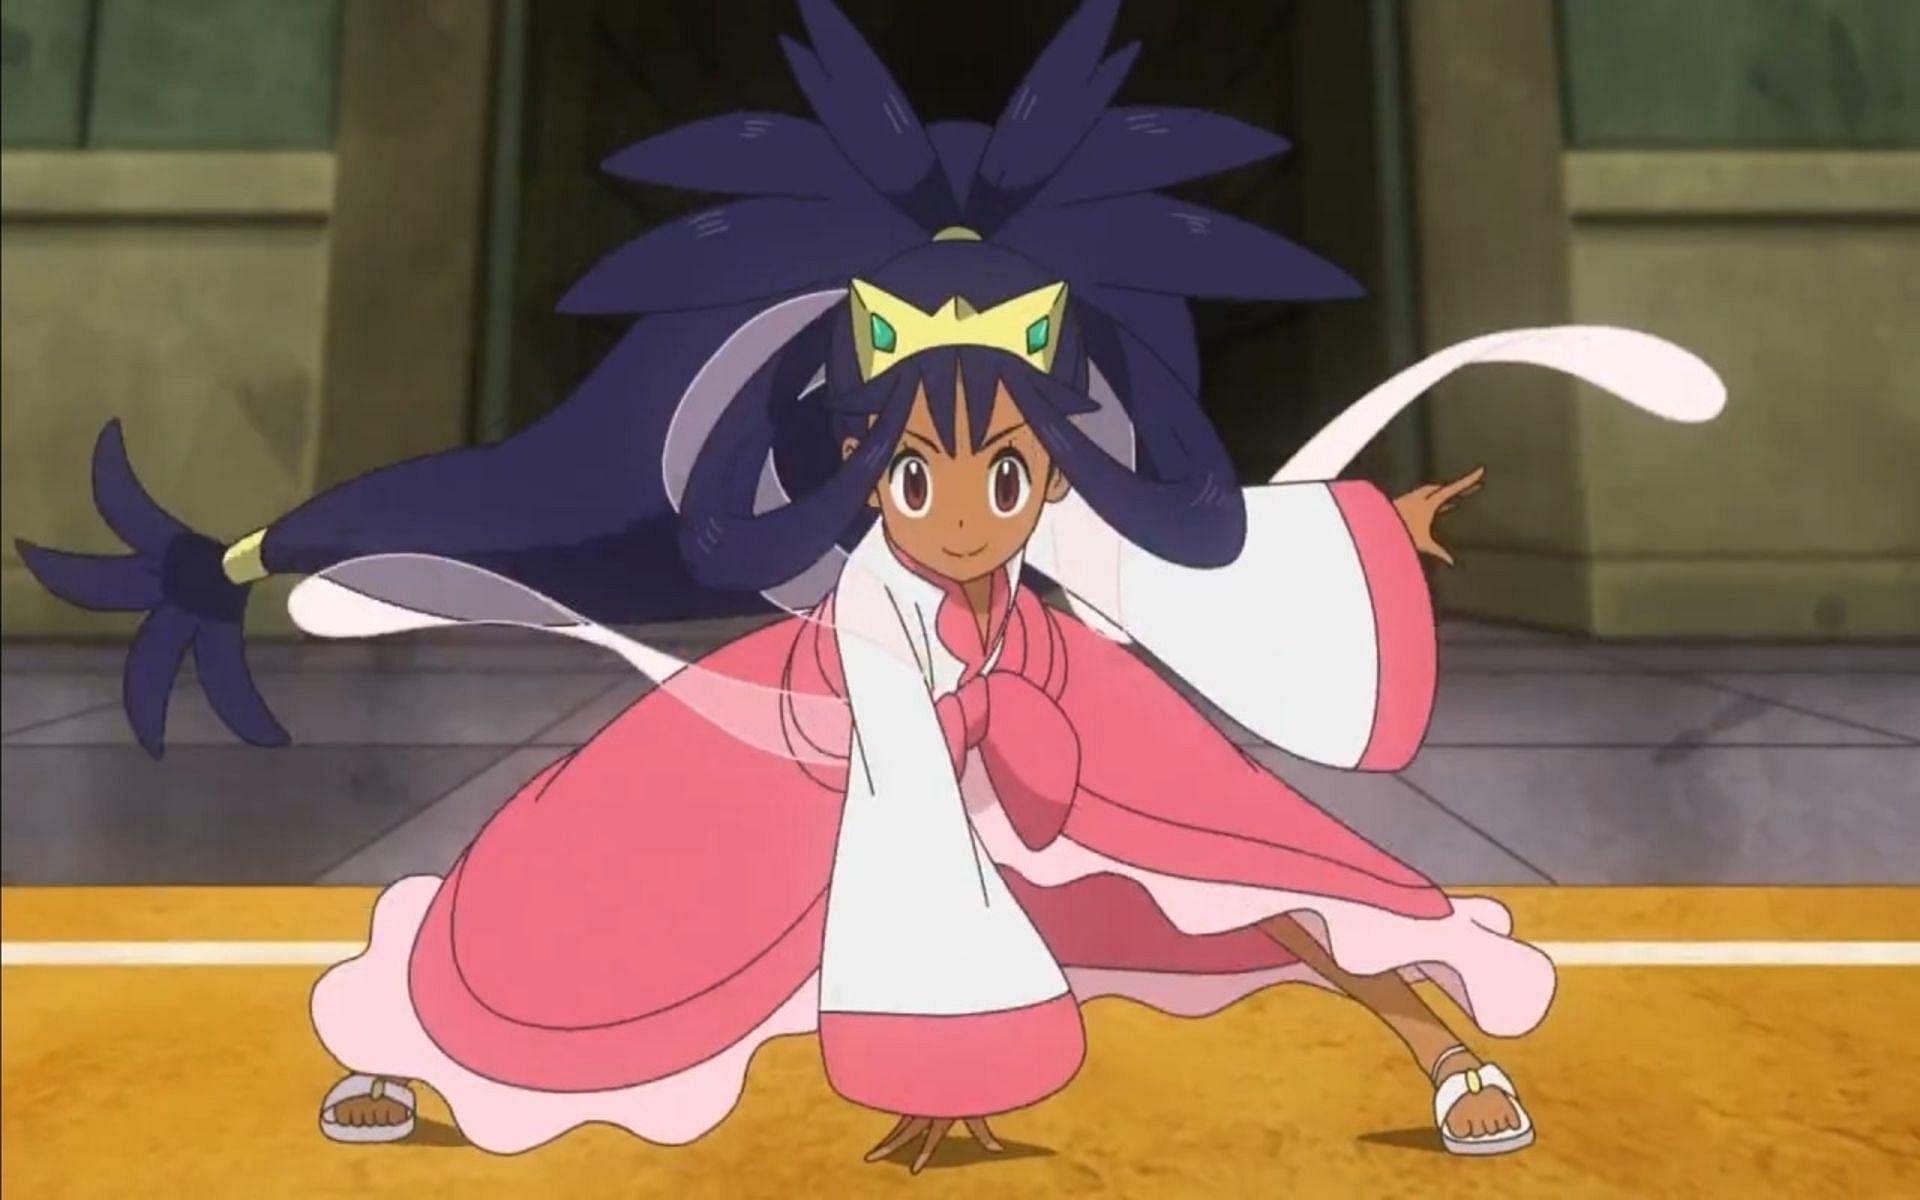 Iris was a former Dragon-type Gym Leader (Image via The Pokemon Company)